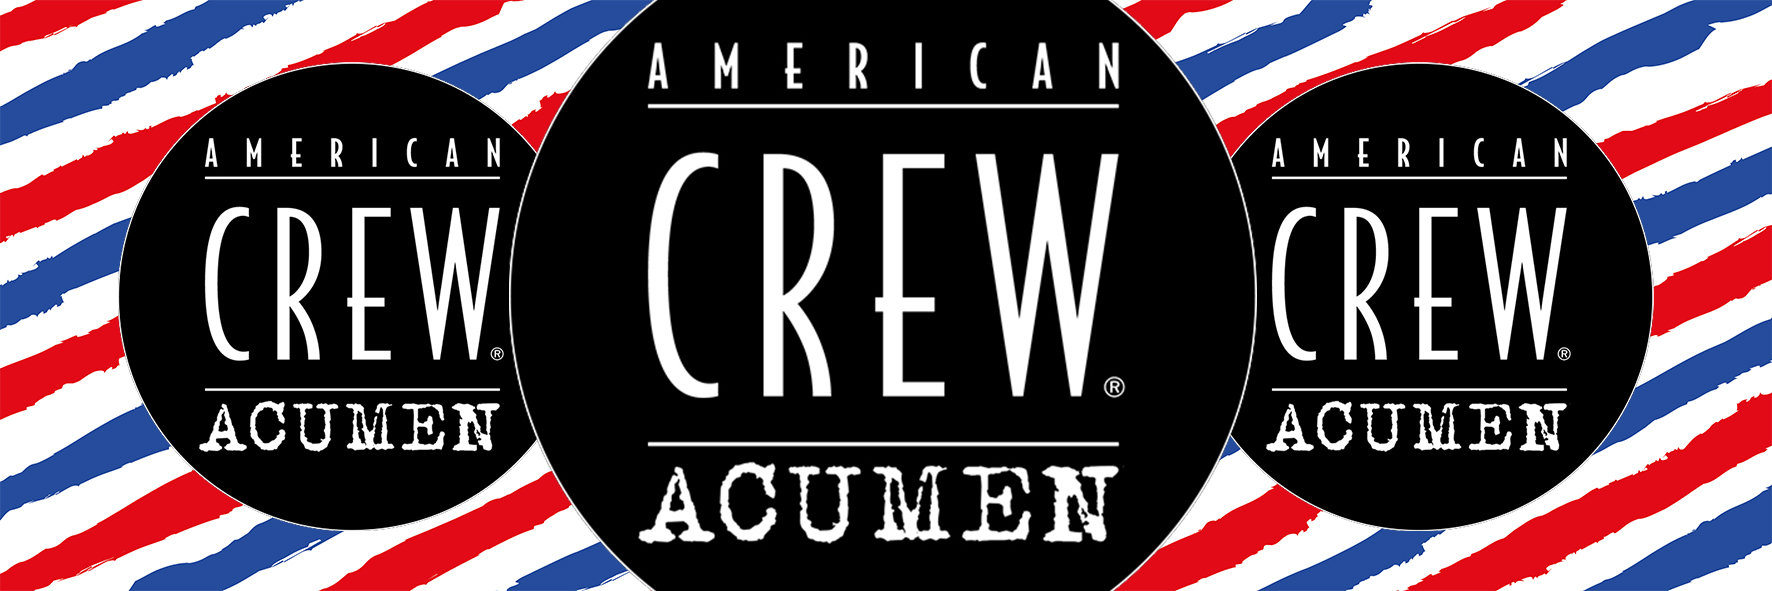 American-Crew-AcuMen